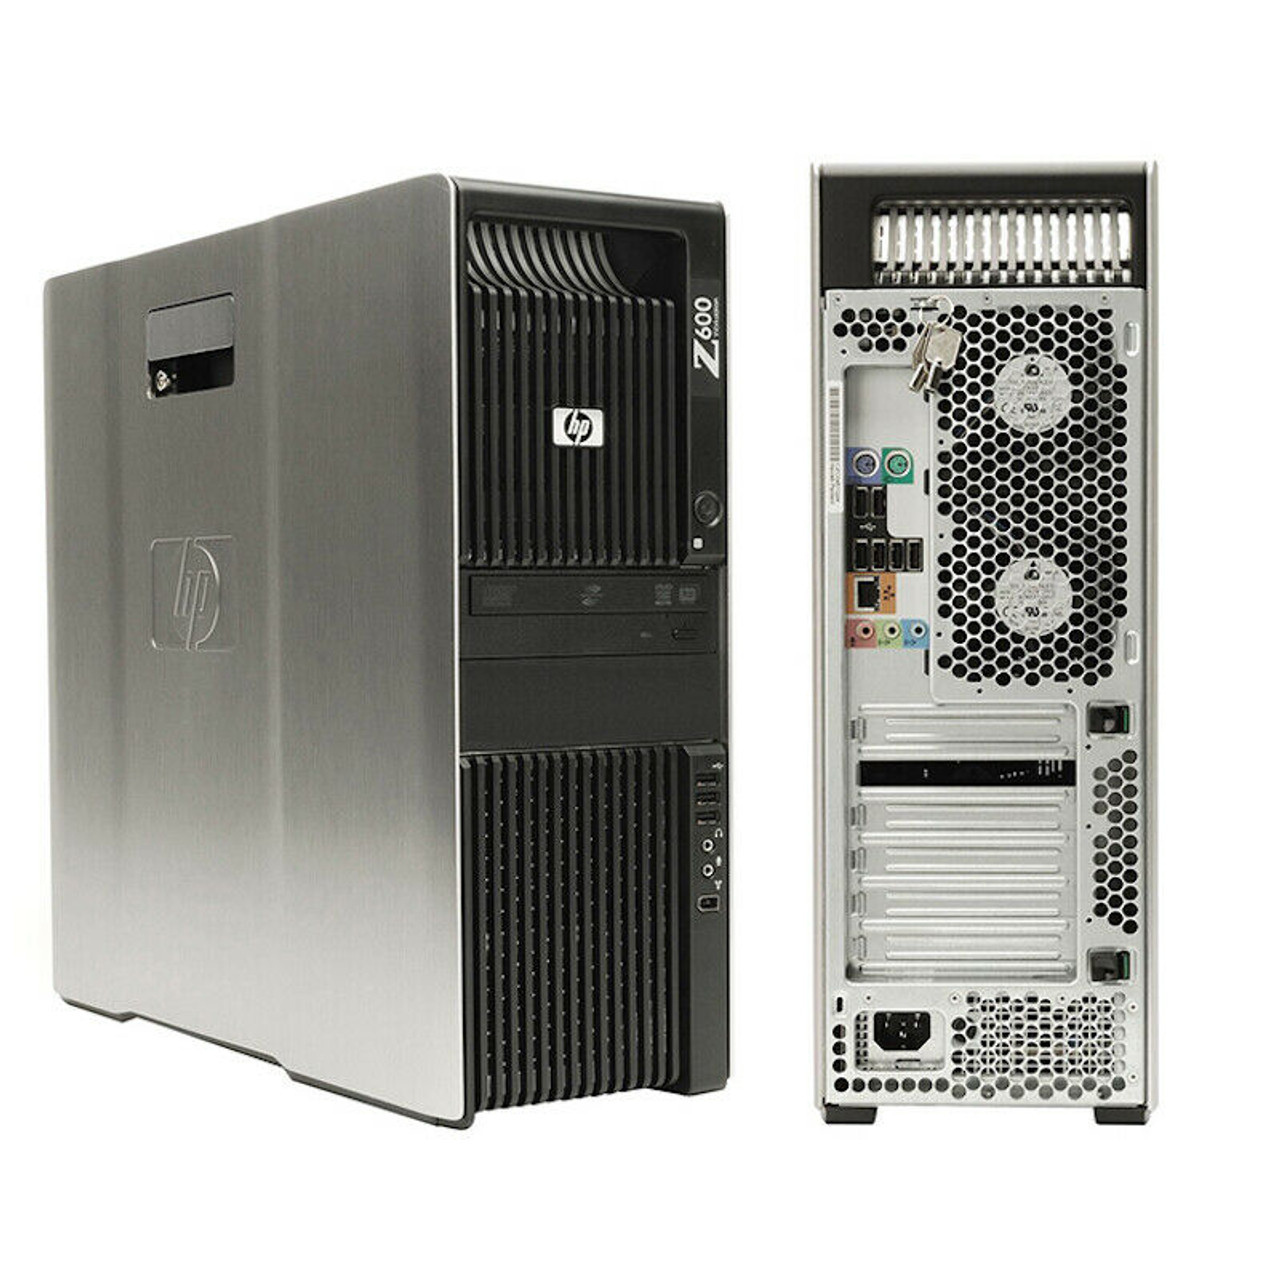 HP Z600 WorkStation